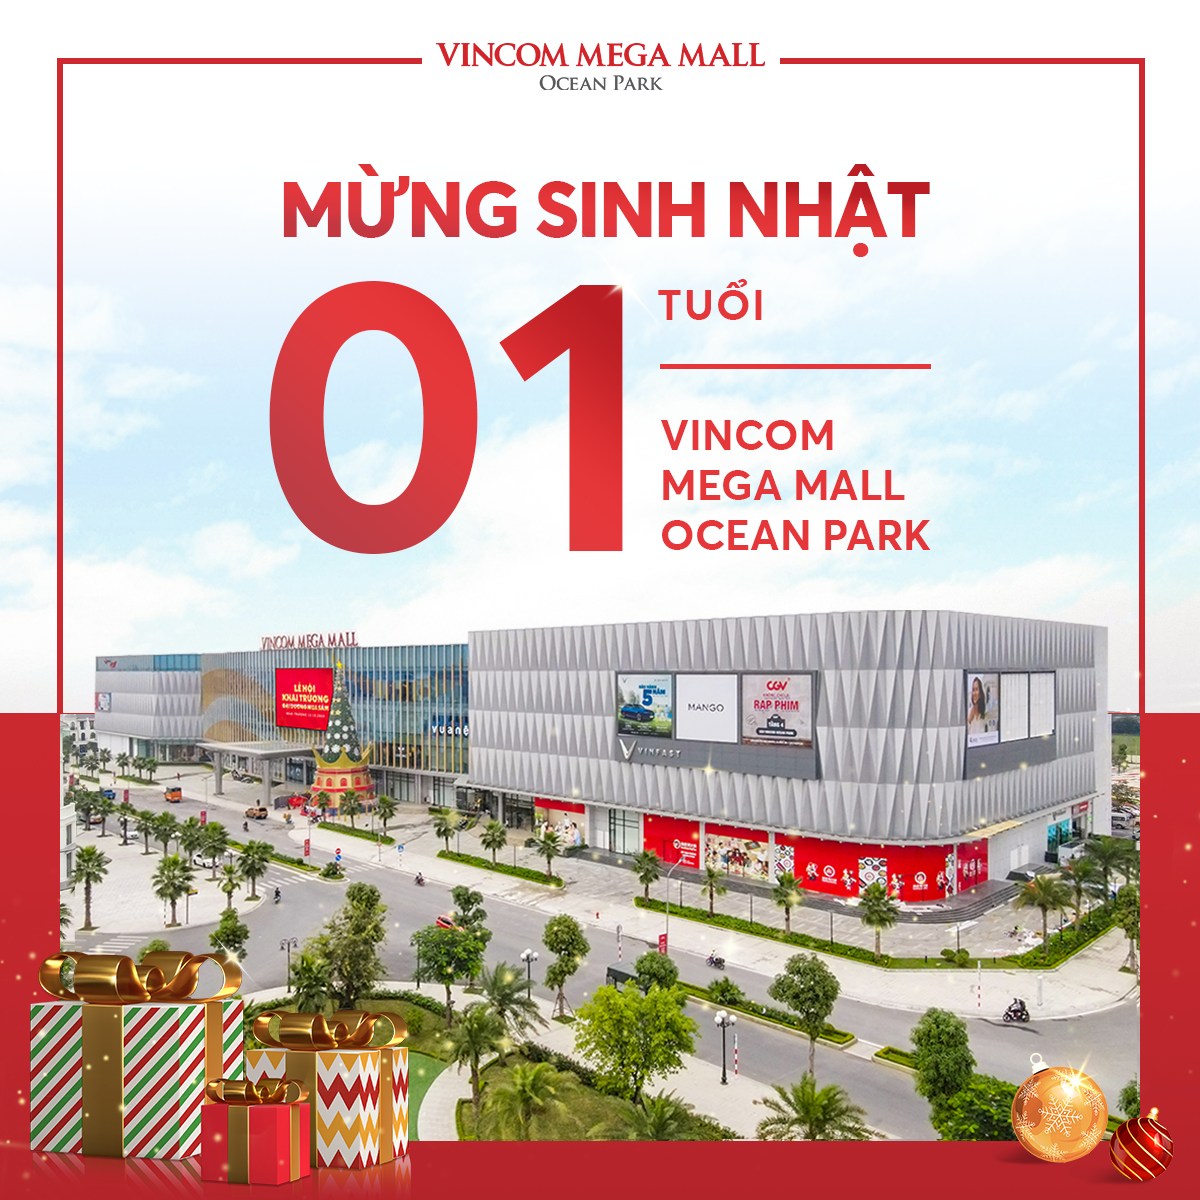 Mừng sinh nhật 01 tuổi của Vincom Mega Mall Ocean Park